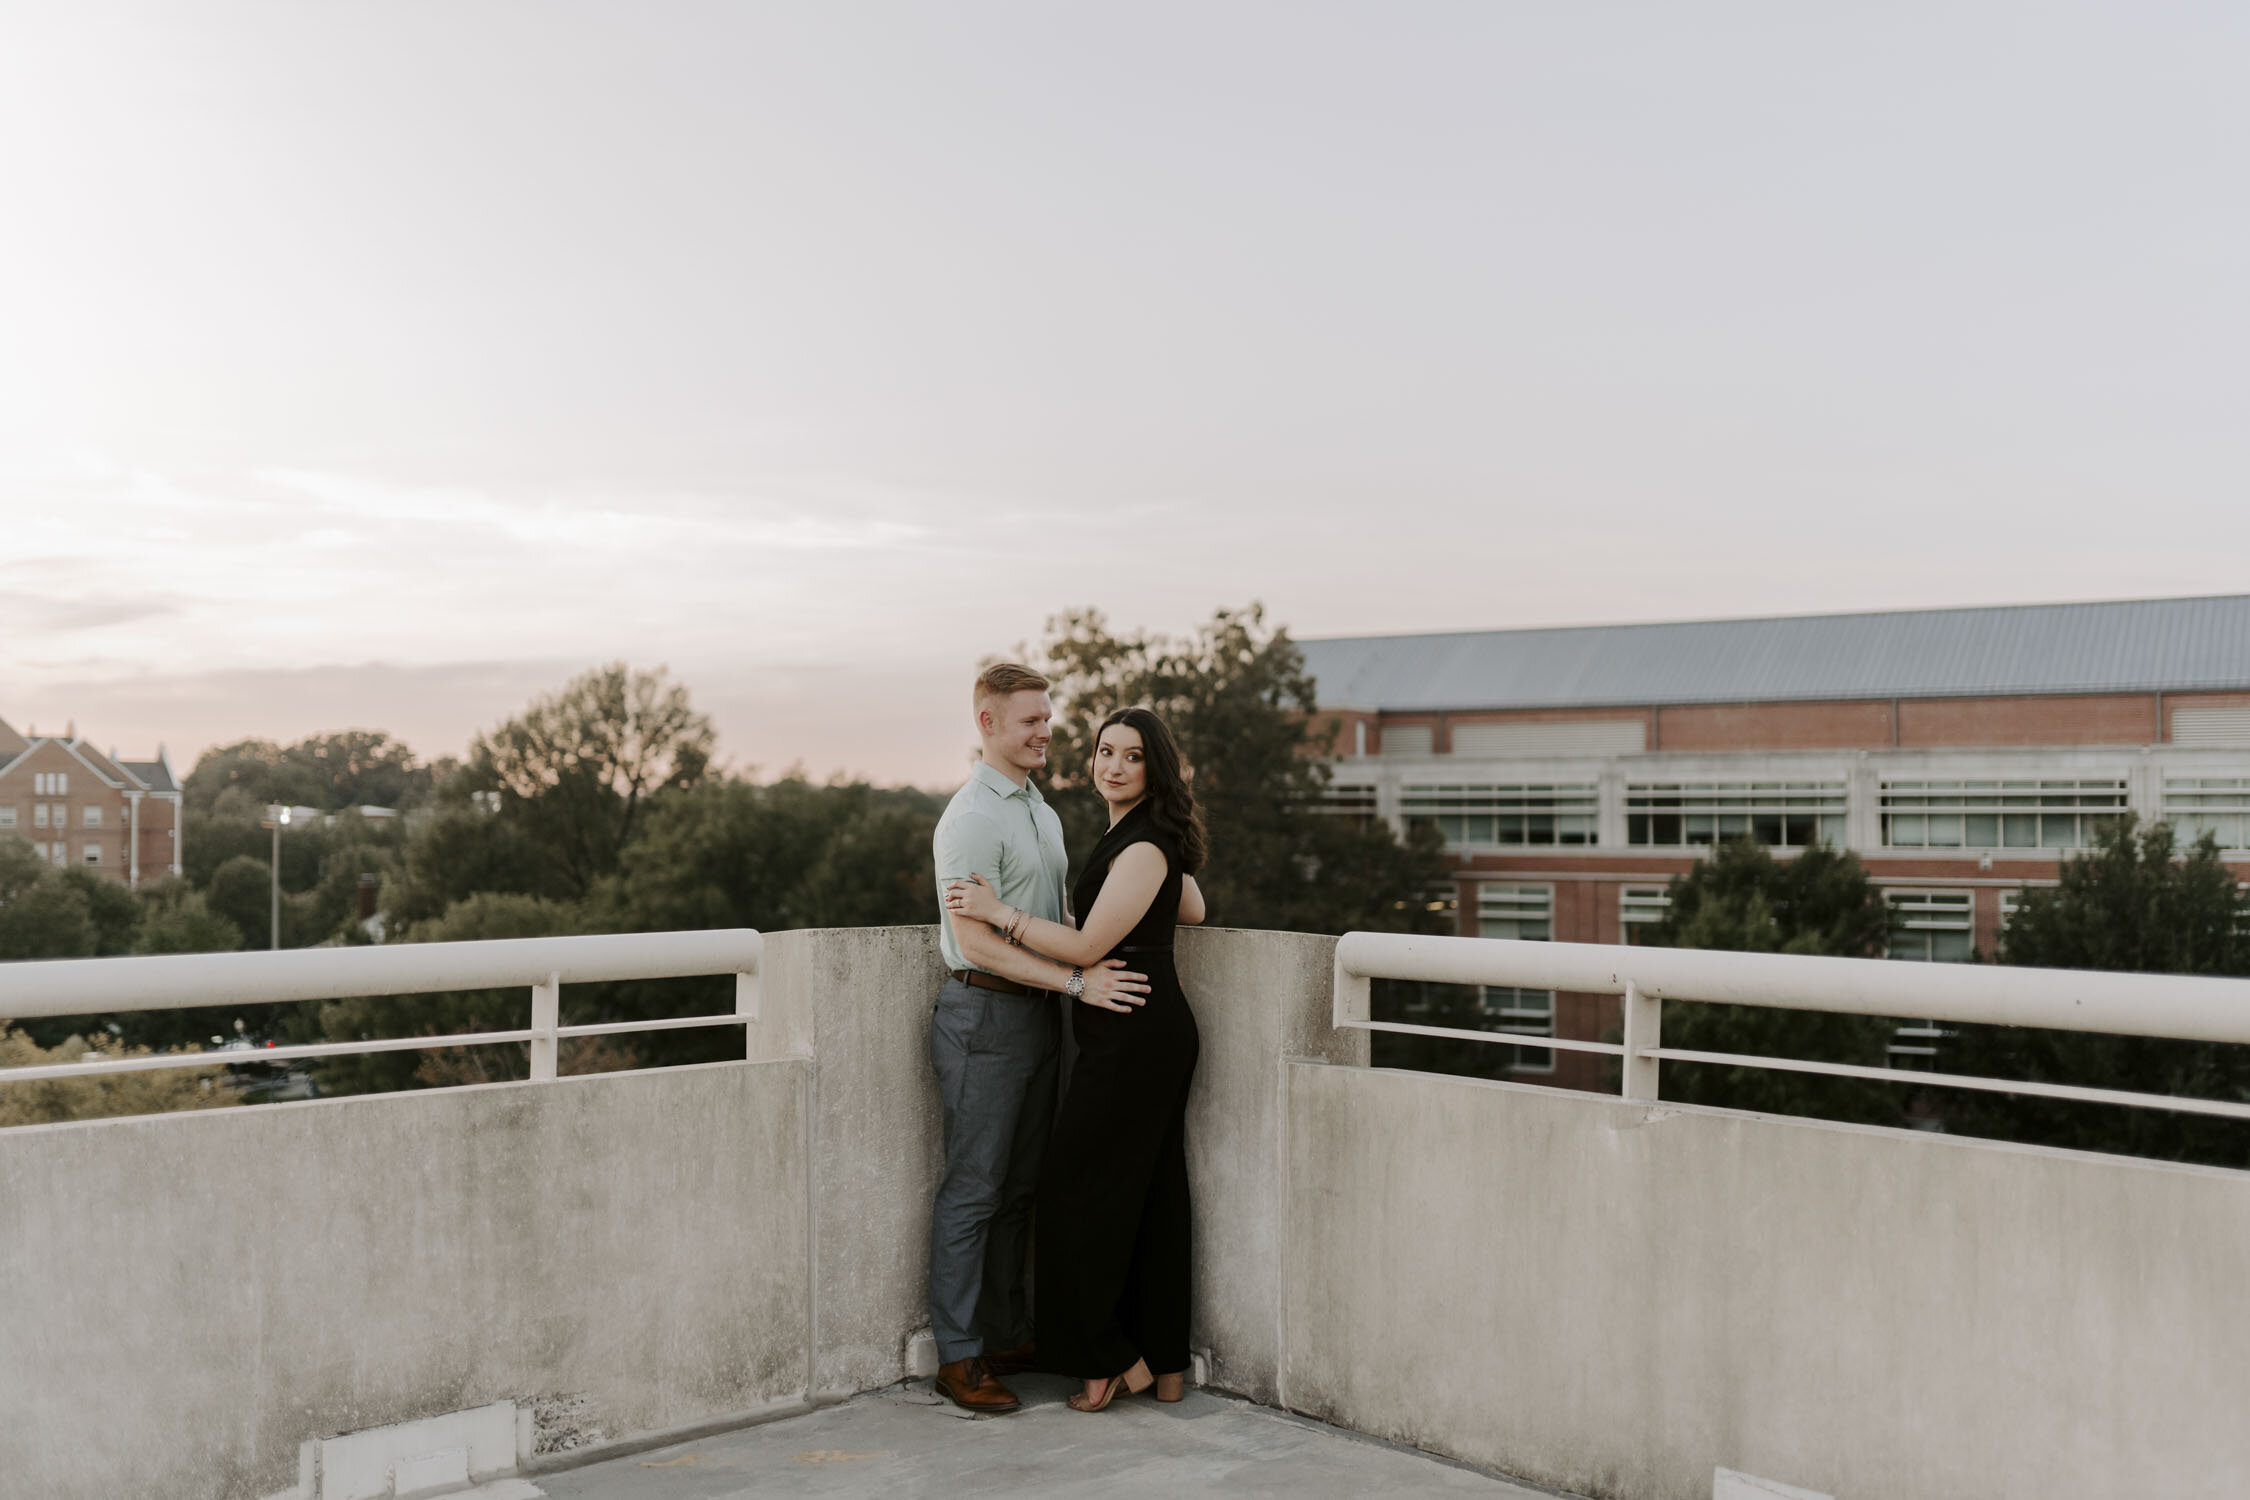 UNCG Engagement Session by Kayli LaFon Photography | Greensboro Winston-Salem, NC Wedding & Elopement Photographer